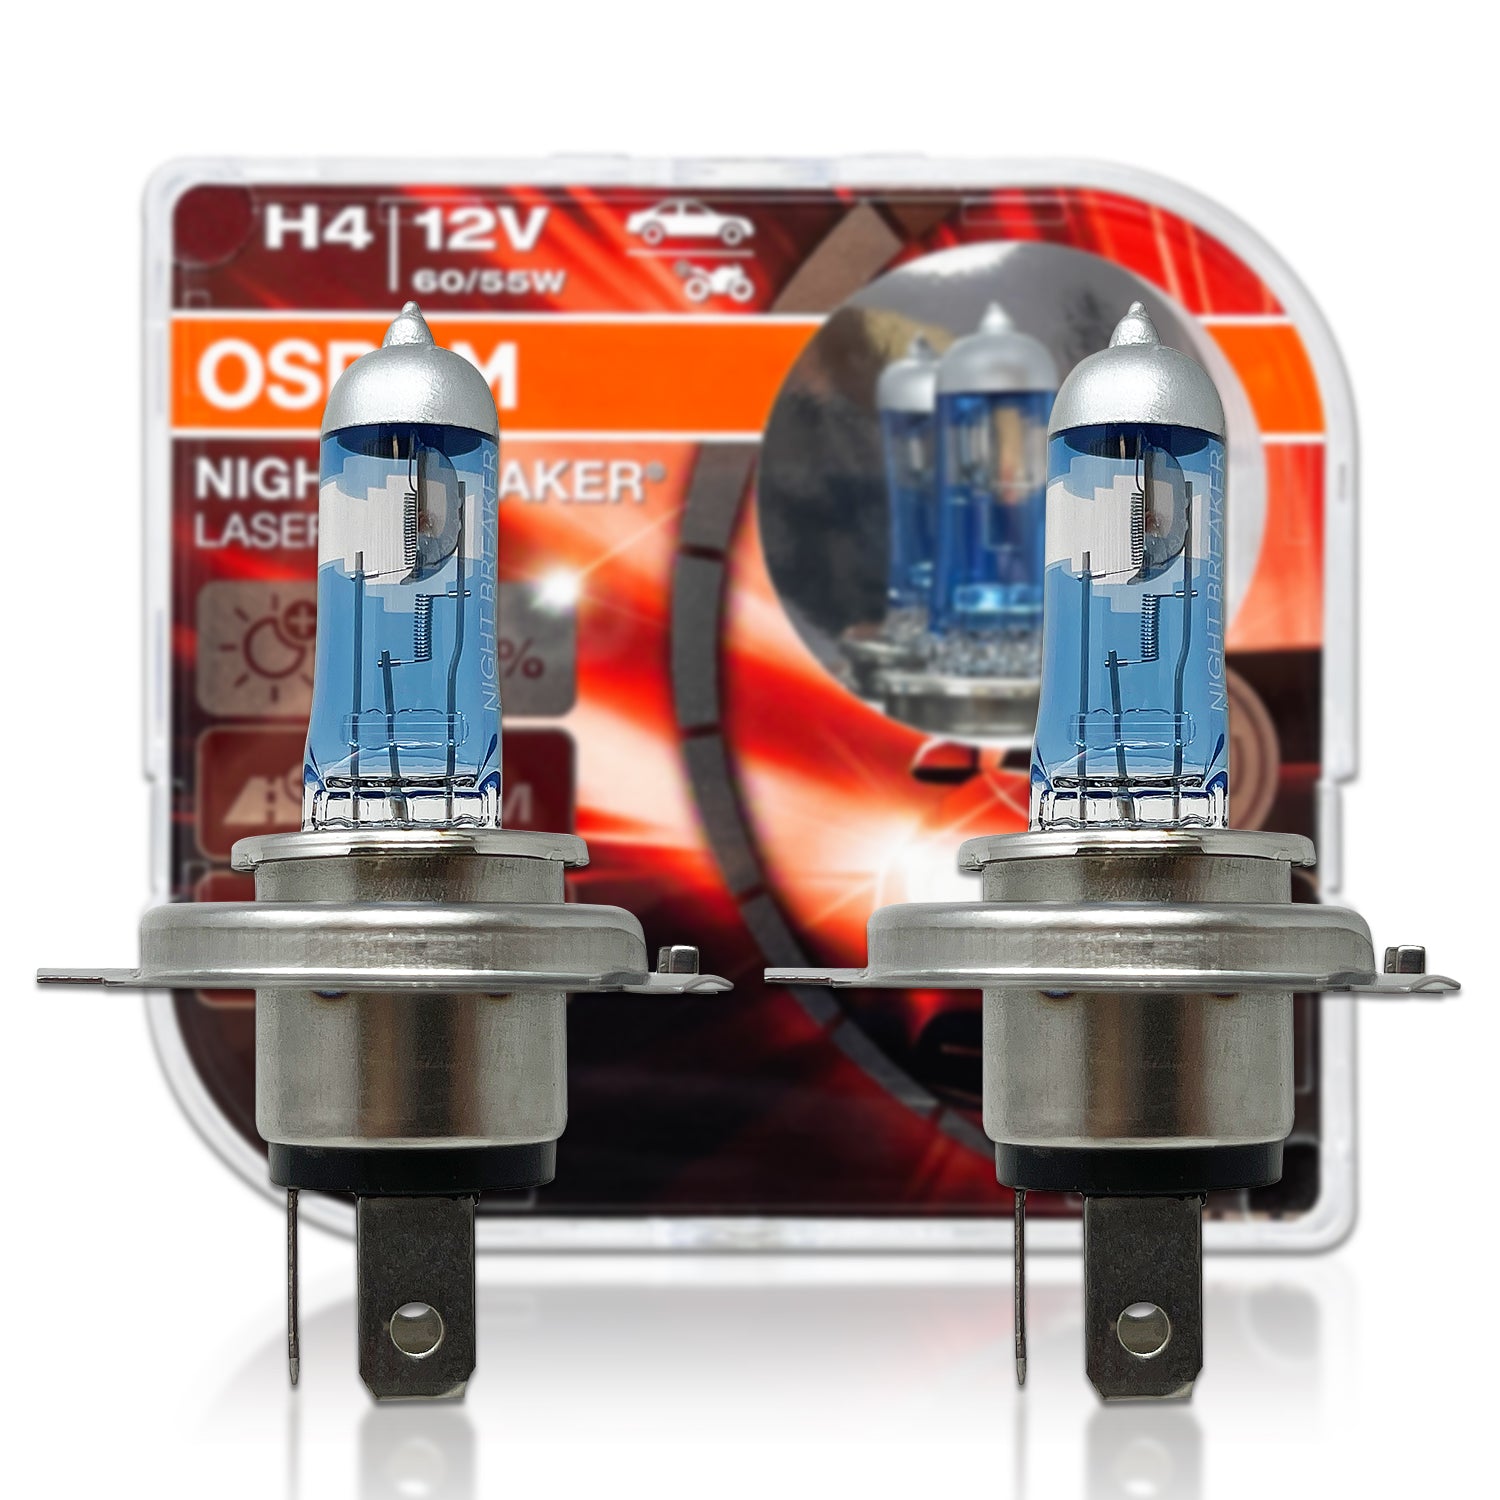 2 Original Osram LED Night Breaker/Socket: H4/Approval Germany ( Abg )